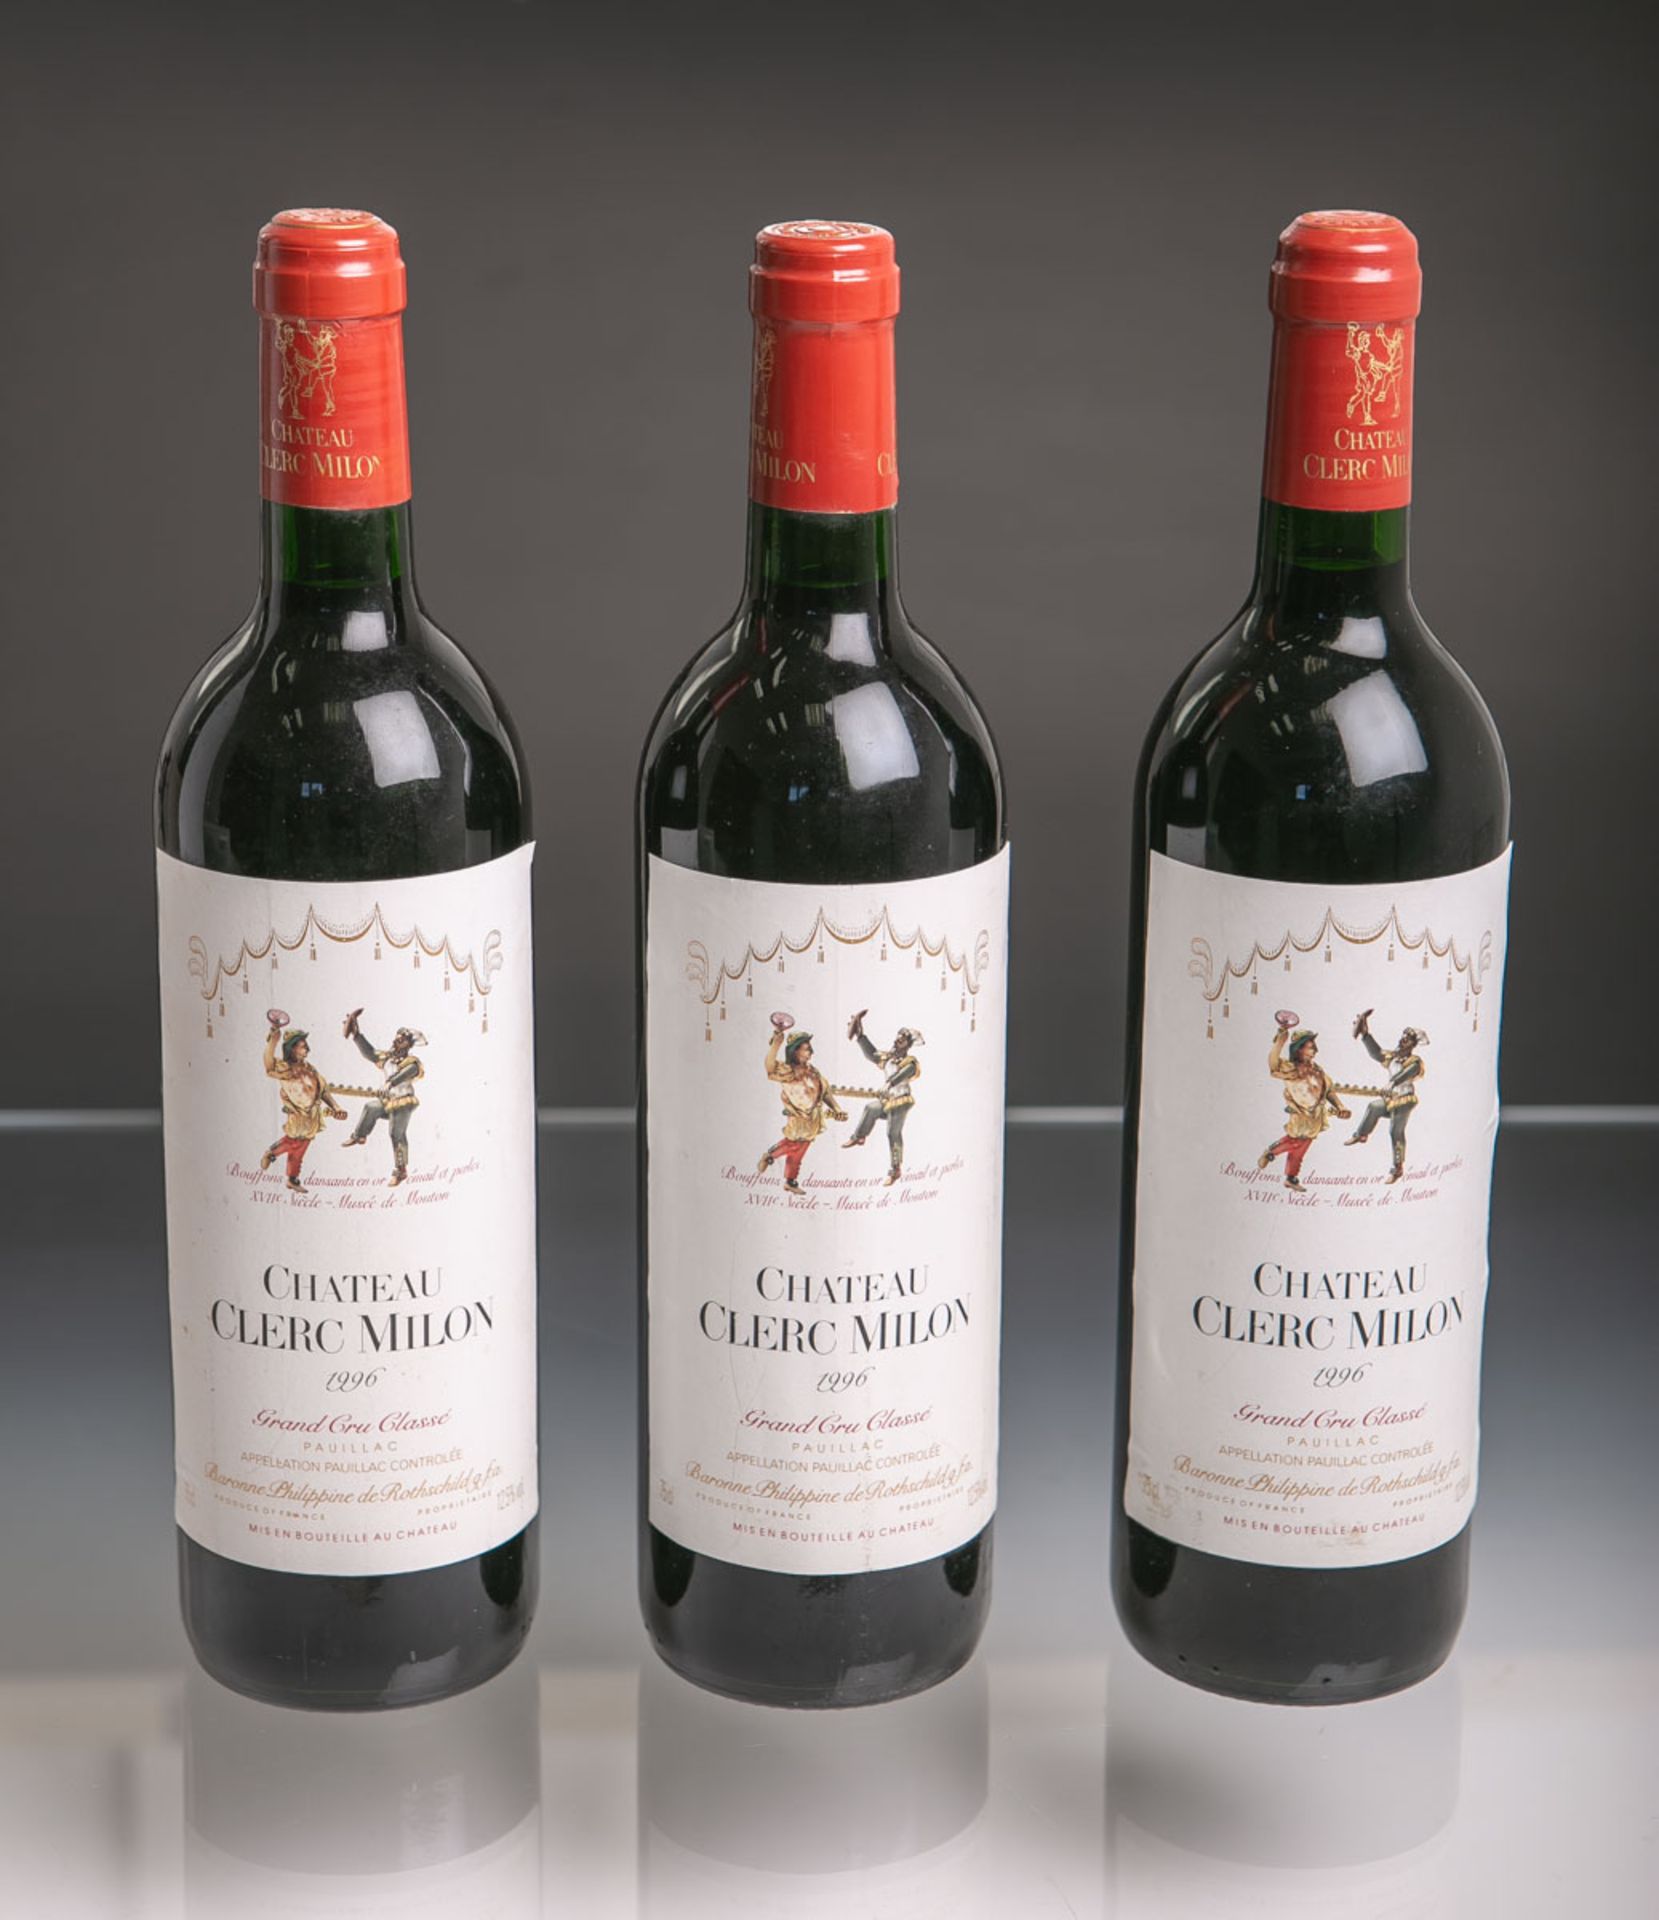 3 Flaschen von Chateau Clerc Milon, Pauillac, Bordeaux, Grand Cru Classe (1996), Rotwein, je 0,75